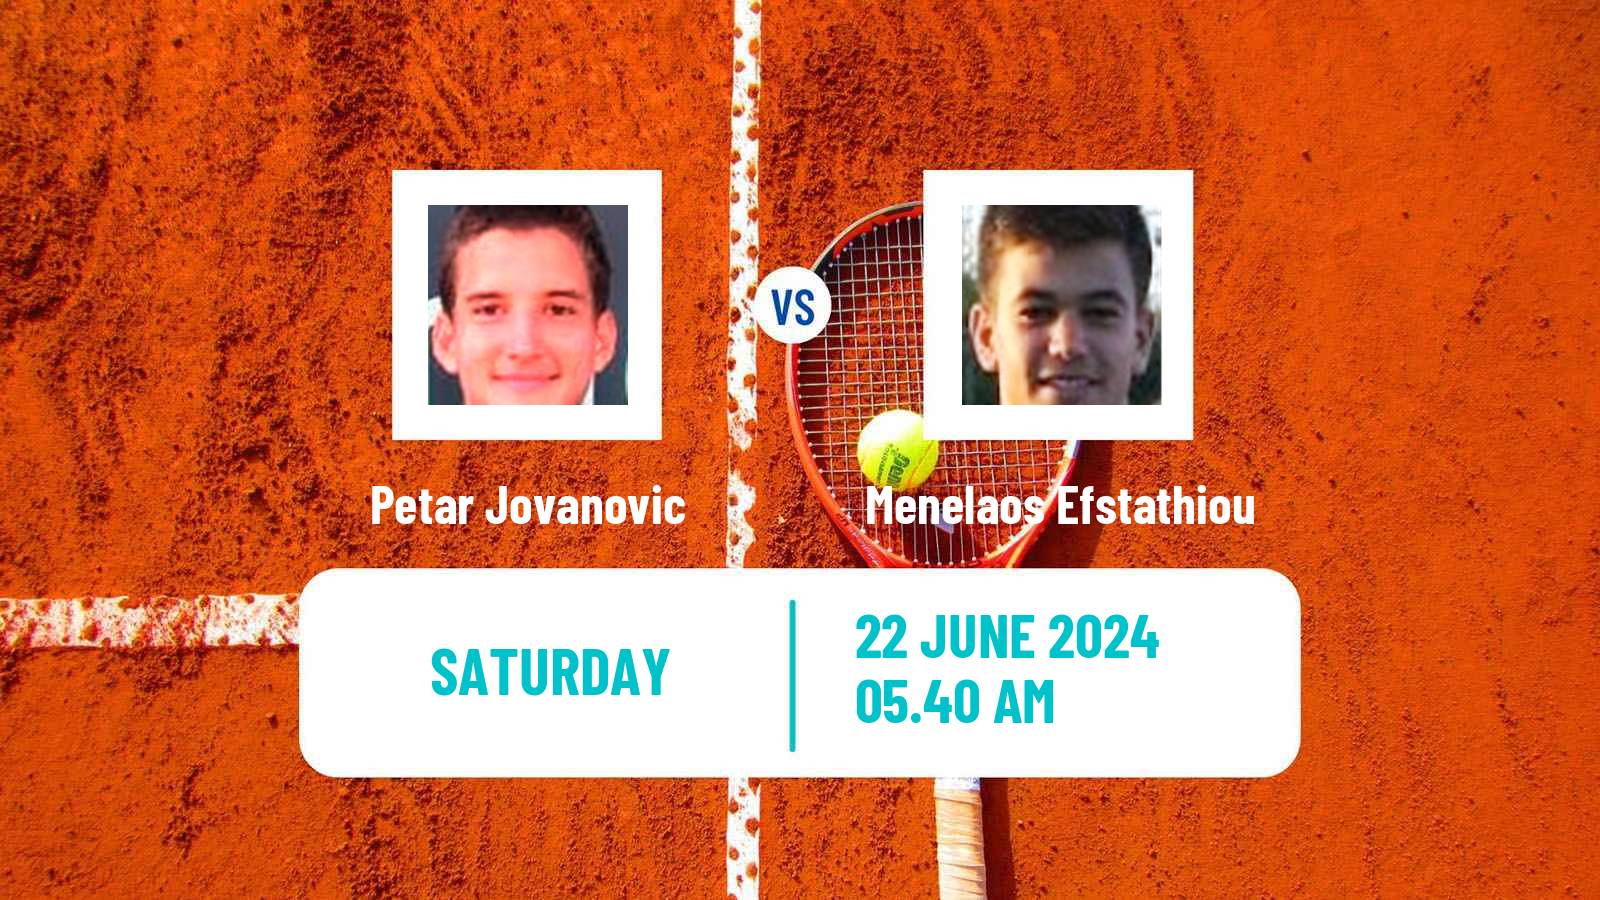 Tennis Davis Cup Group III Petar Jovanovic - Menelaos Efstathiou